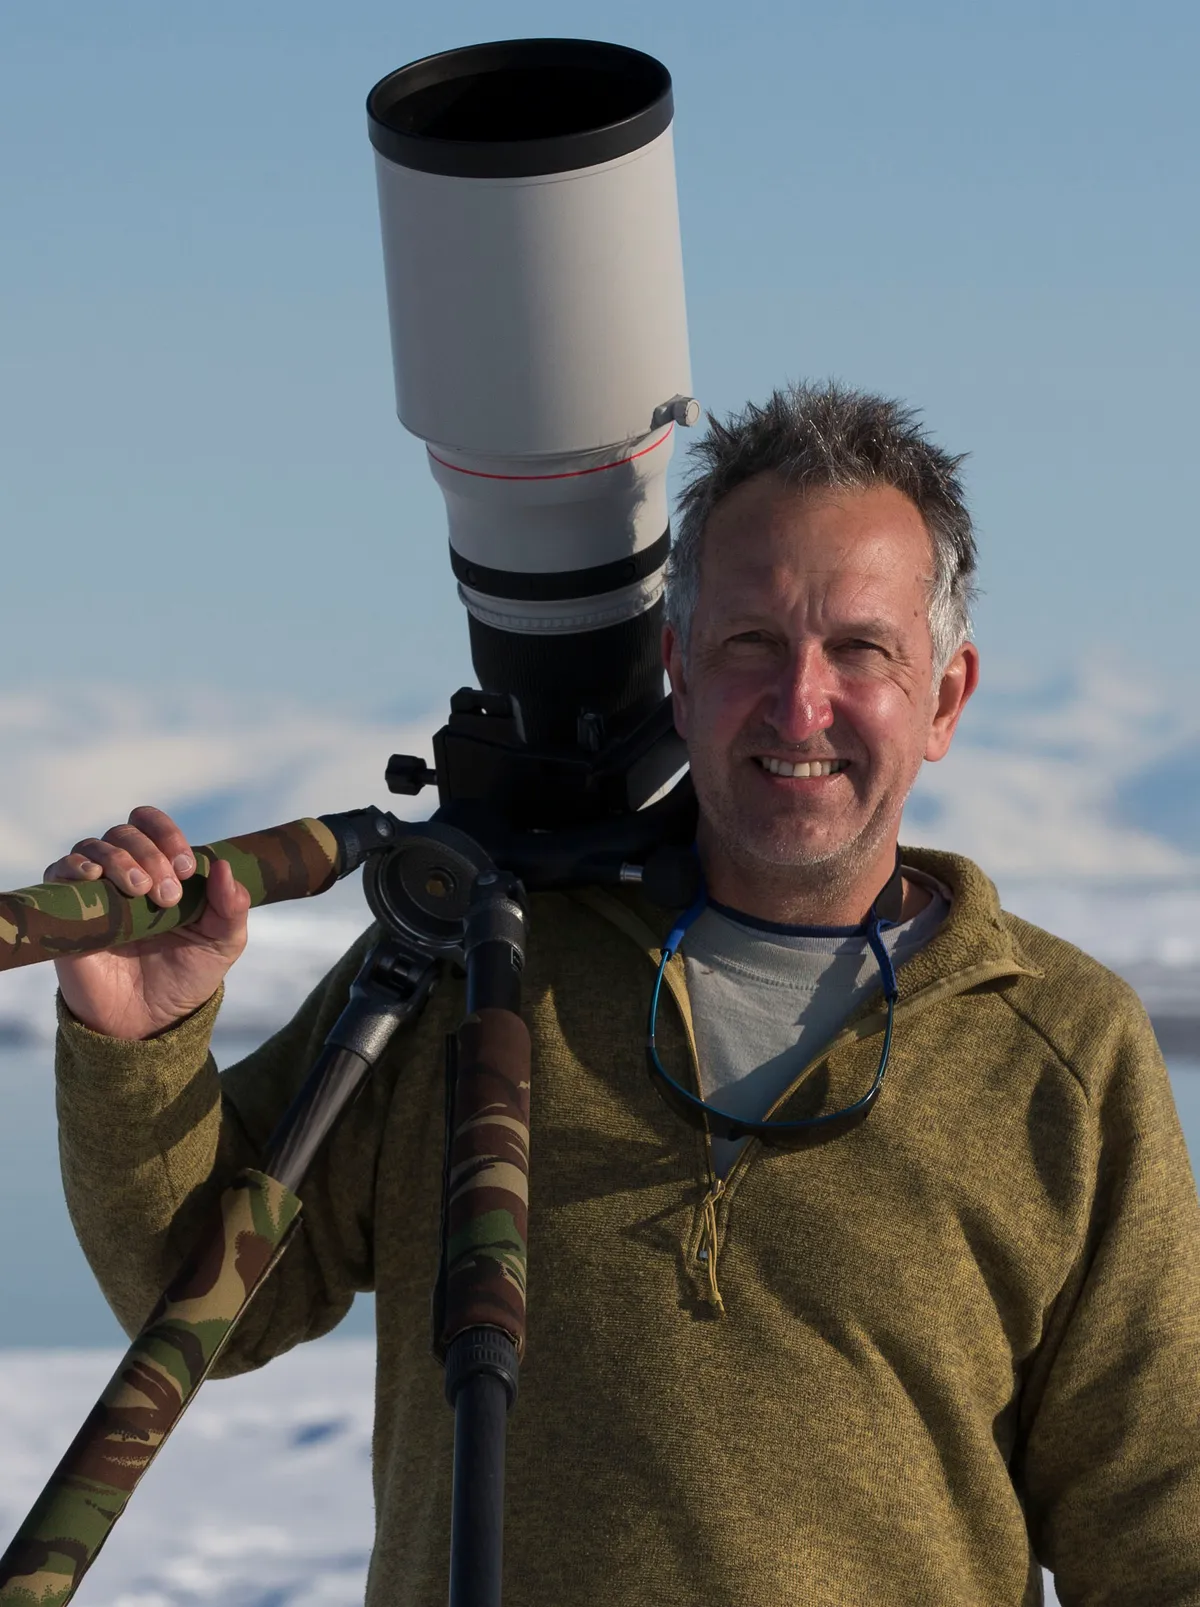 Mark Carwardine is the presenter of the BBC Wildlife Photography Masterclass series